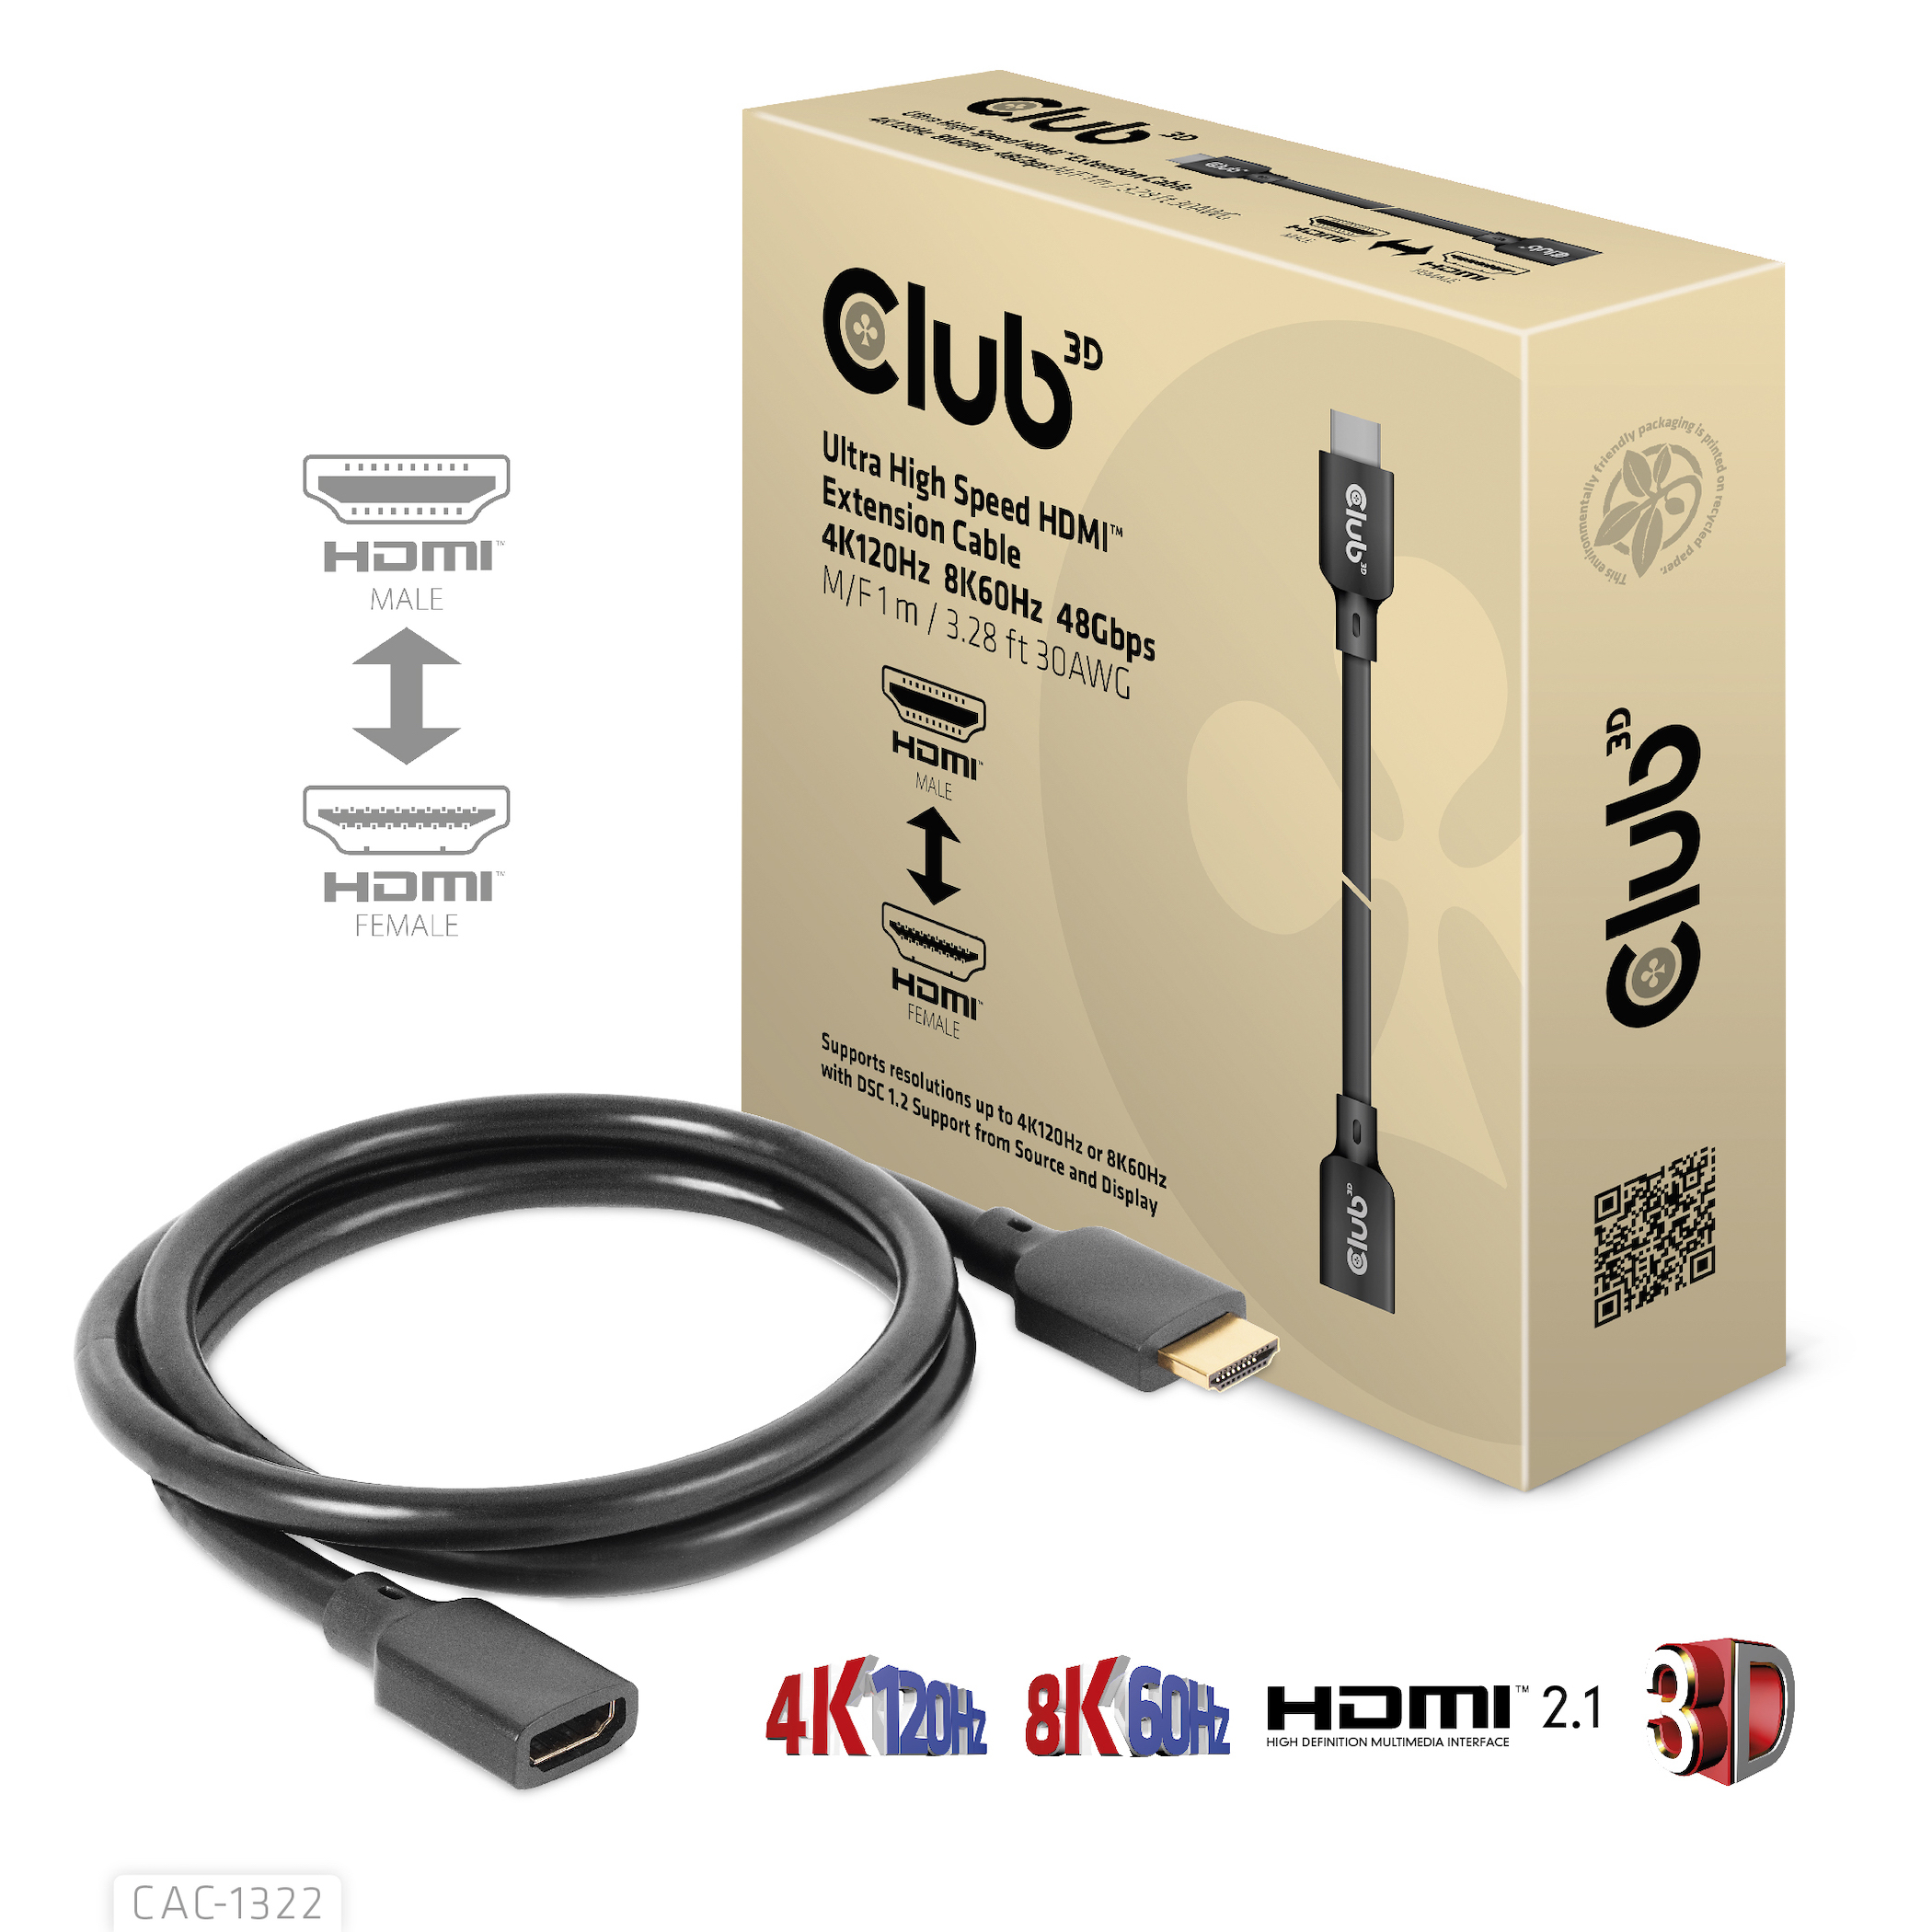 Club 3D Ultra High Speed HDMI Verlängerungskabel 4K120Hz 8K/60Hz St./B. 1m 30AWG